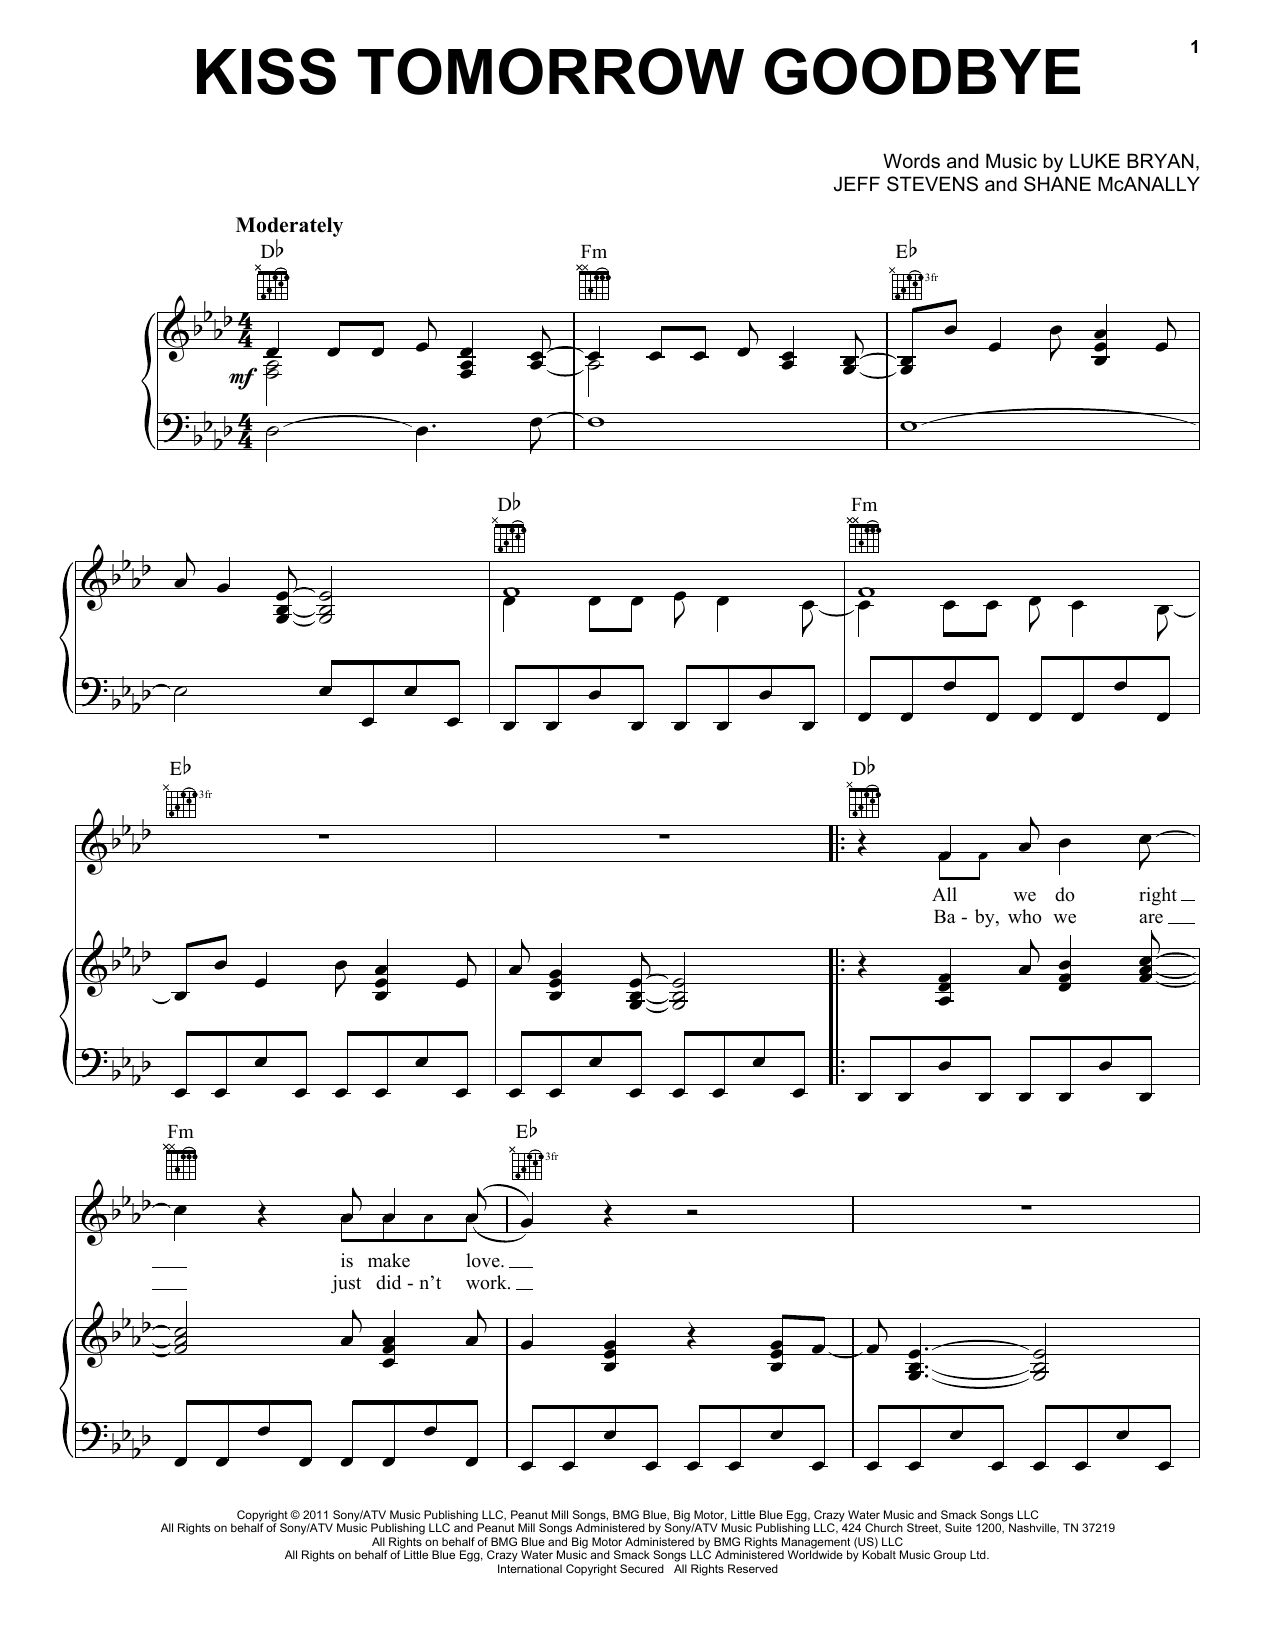 Luke Bryan Kiss Tomorrow Goodbye Sheet Music Notes & Chords for Easy Piano - Download or Print PDF